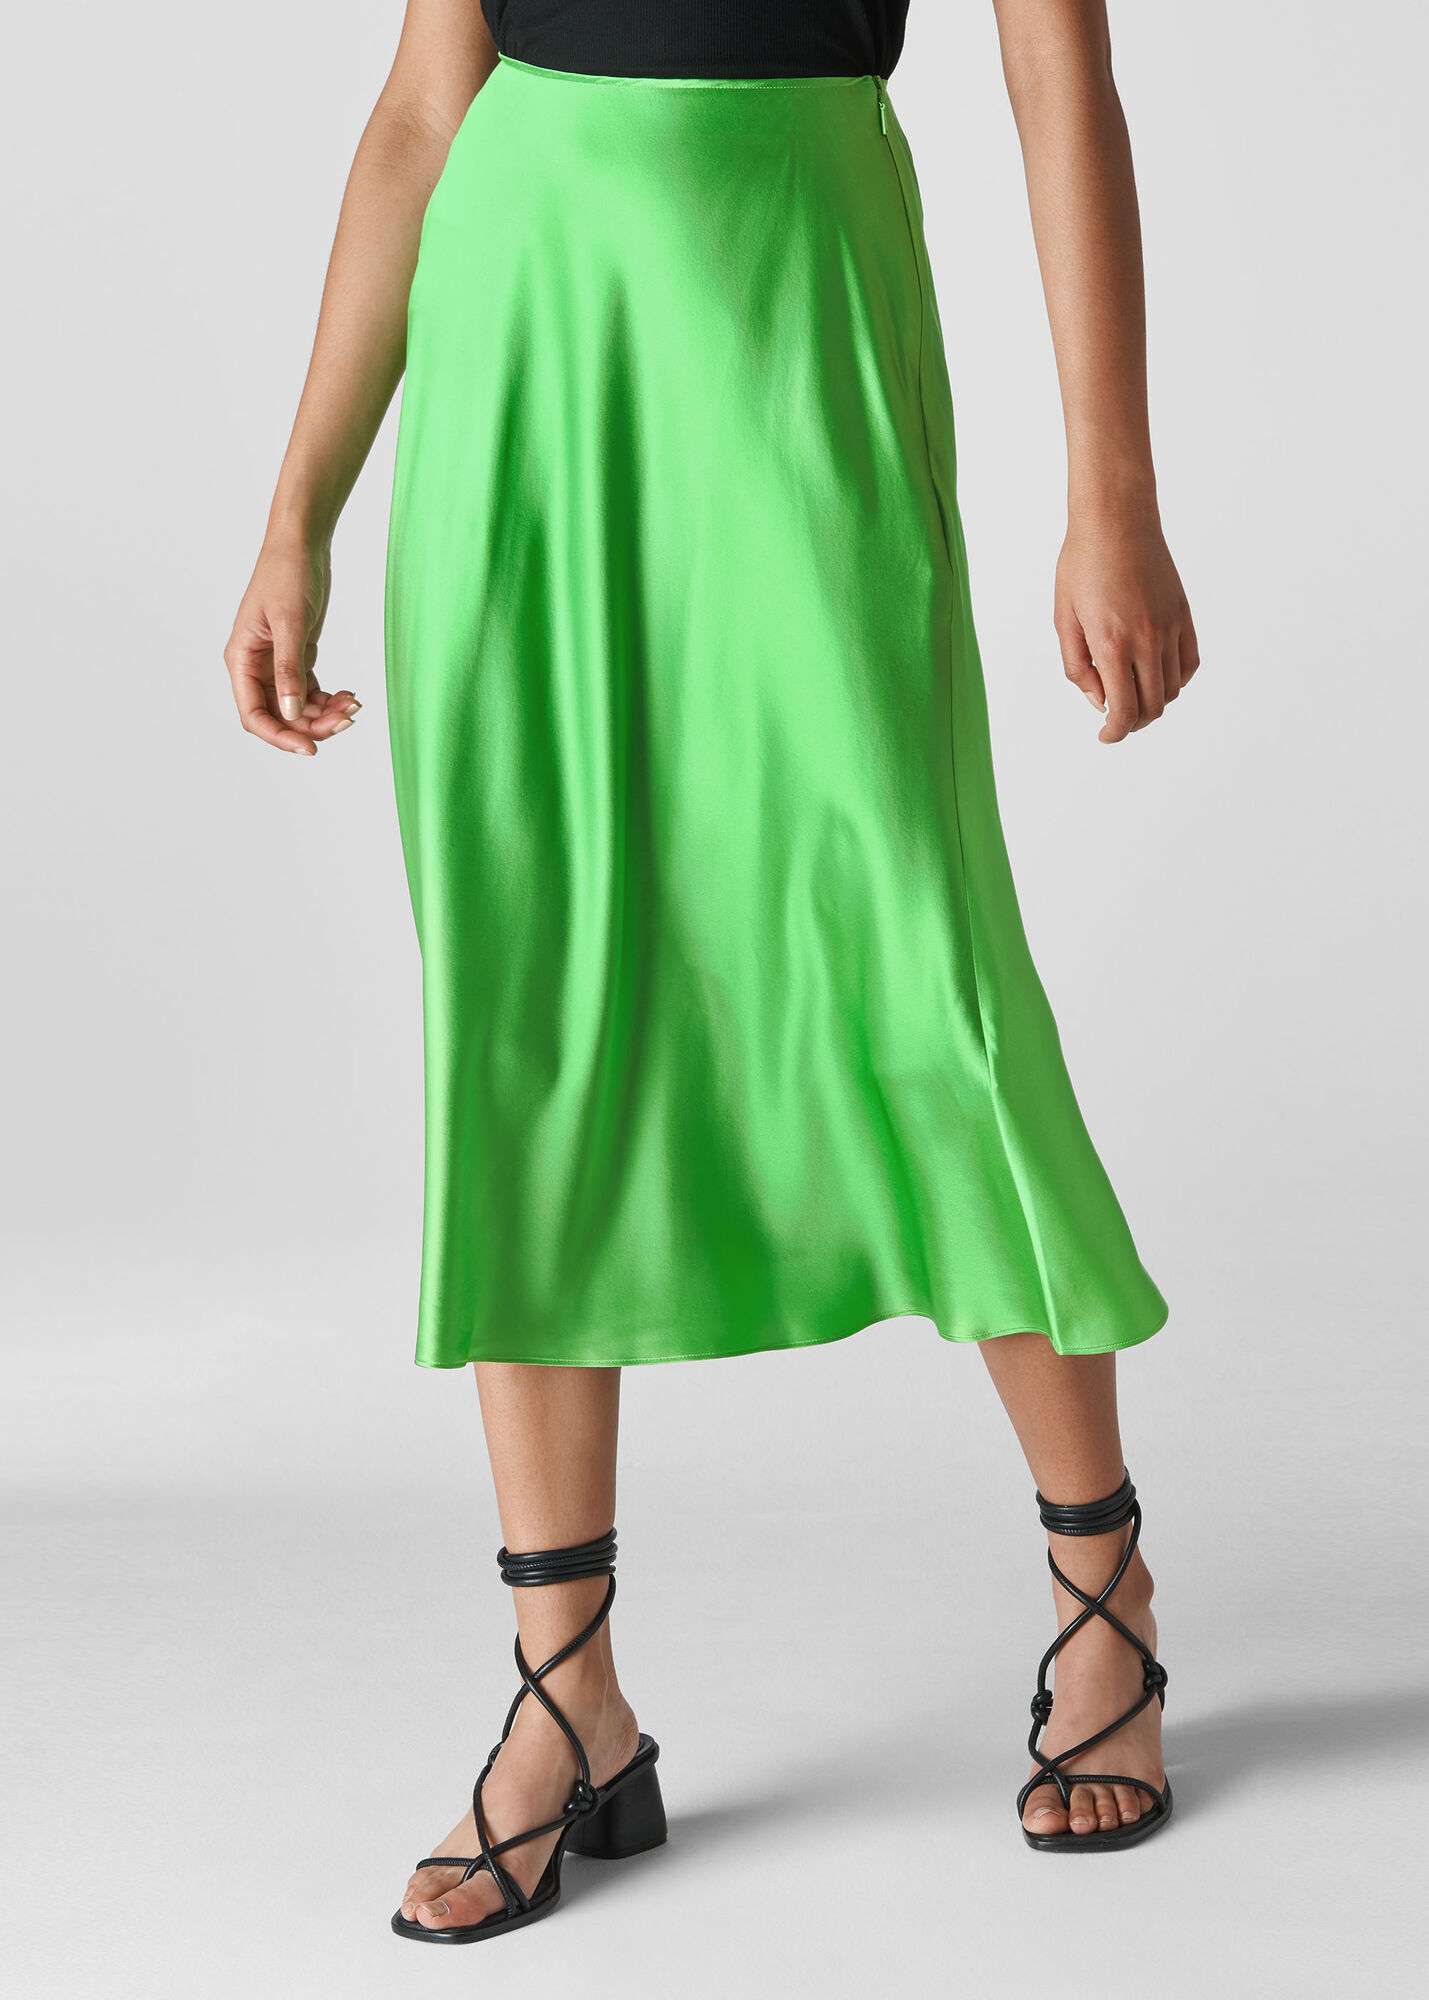 Lime Satin Bias Cut Skirt | WHISTLES